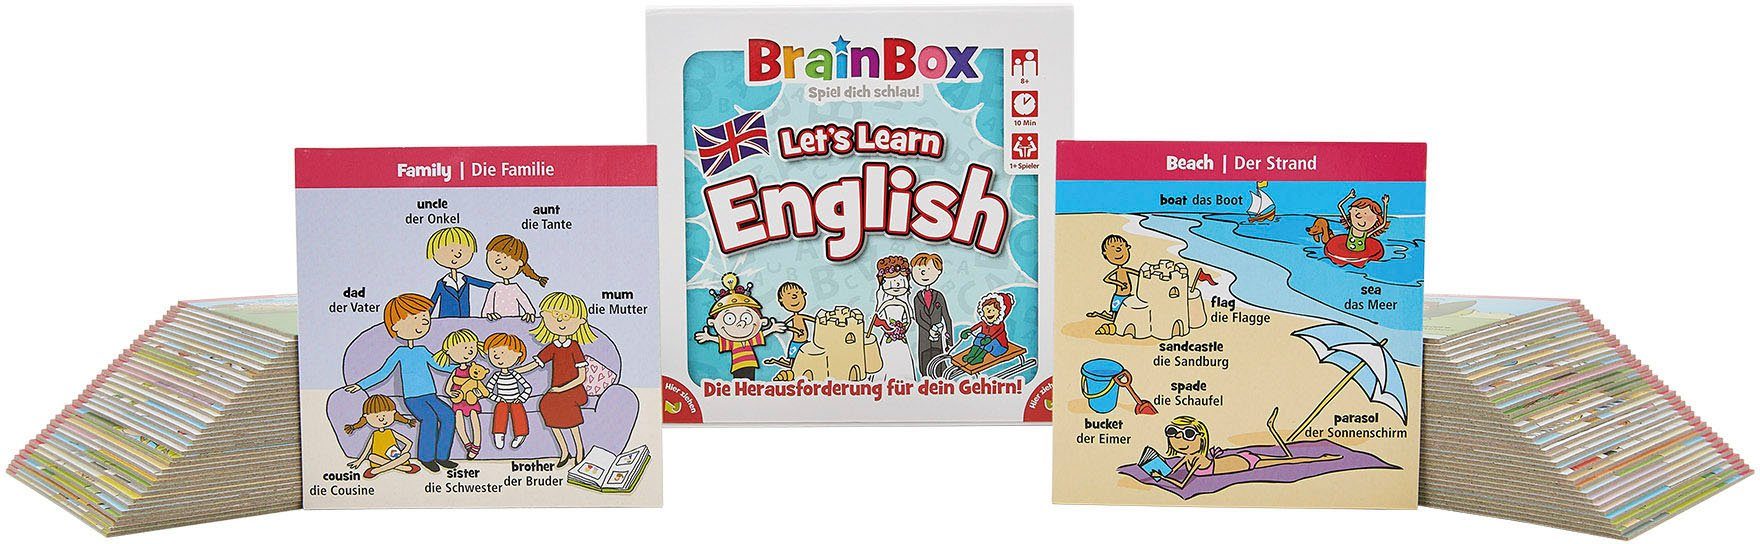 Lernspiel Spiel, BrainBox English Let's Learn